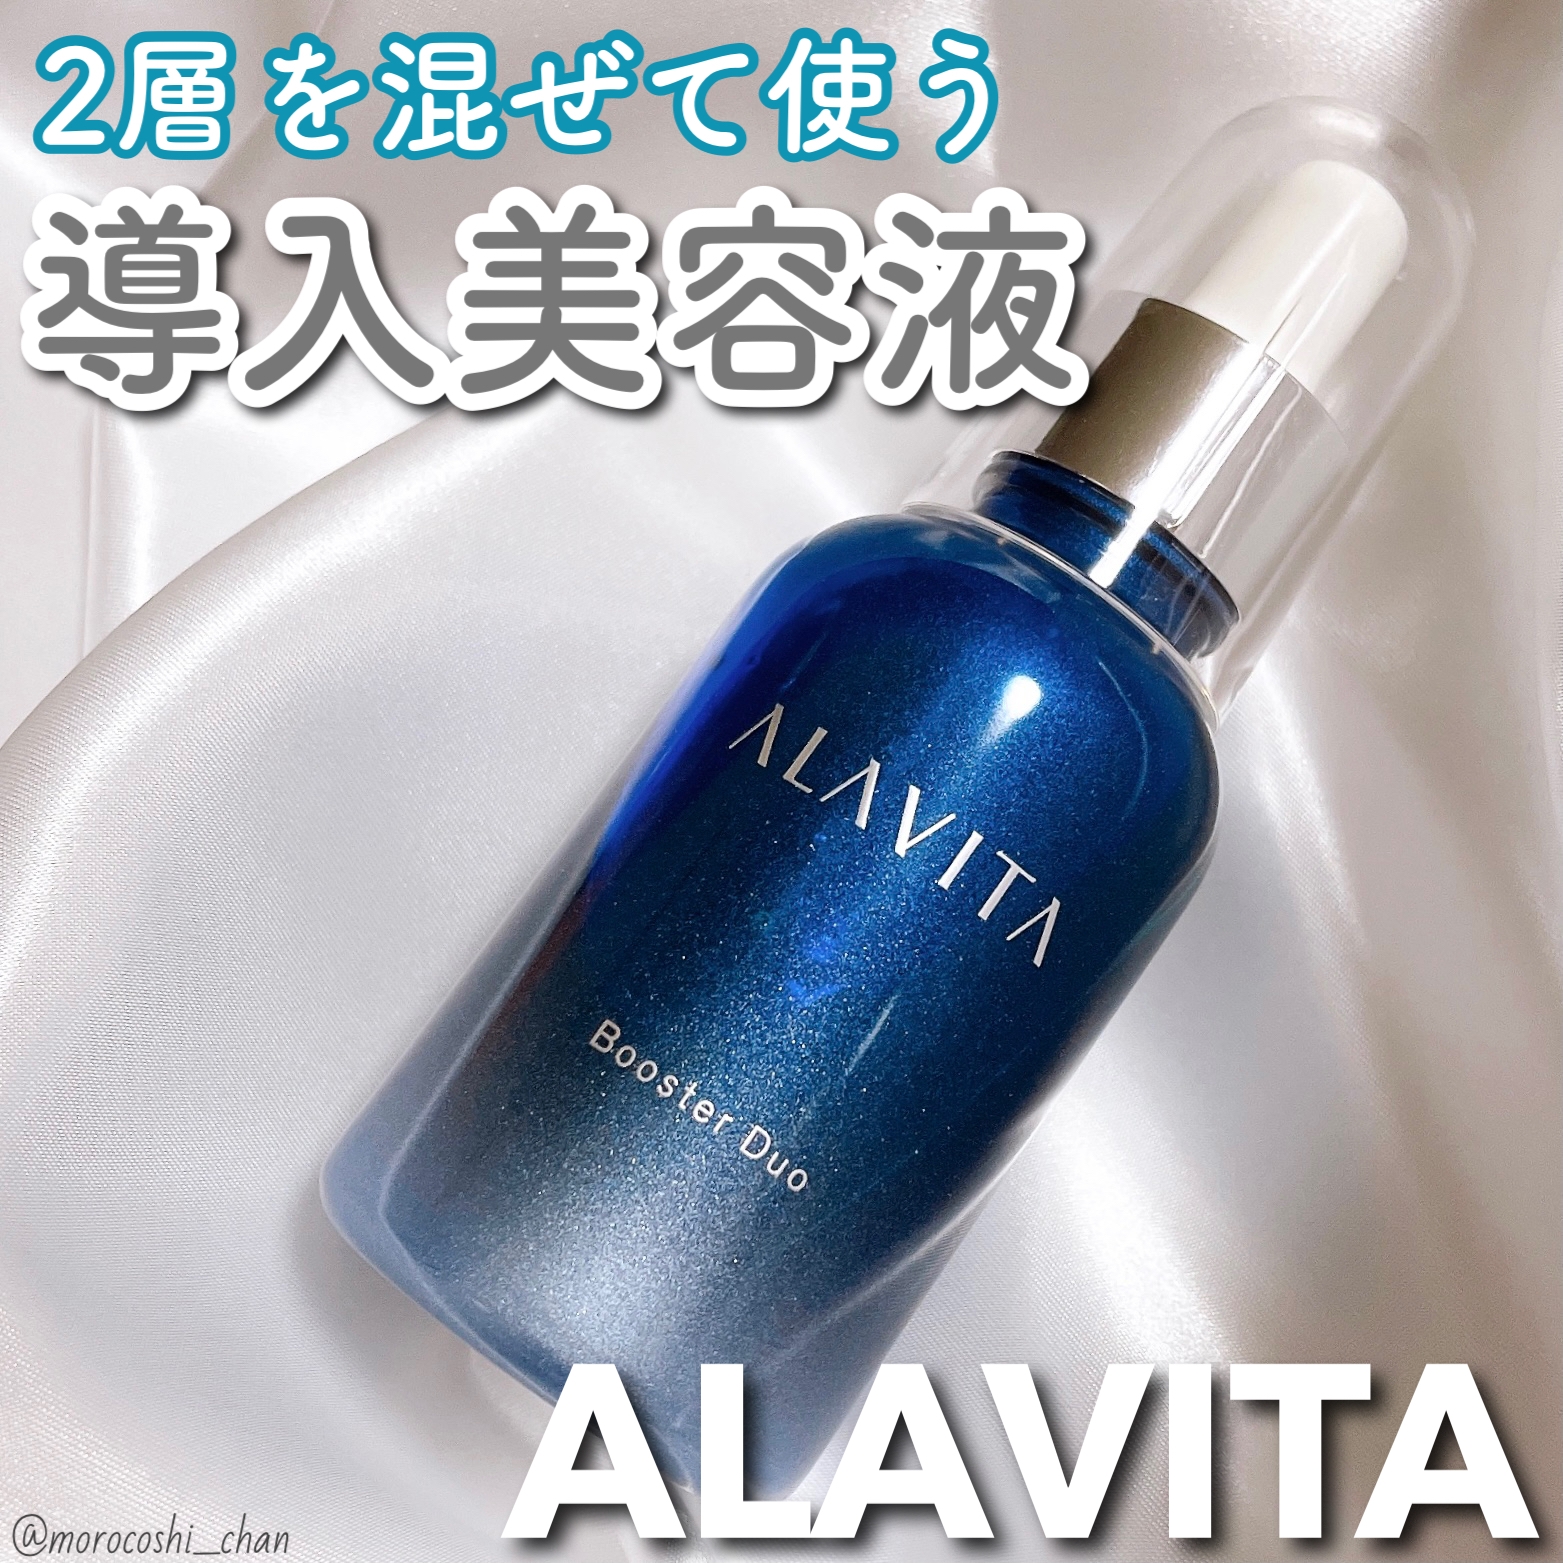 ALAVITA(アラヴィータ) ブースター デュオの良い点・メリットに関するもろこしちゃん🌽さんの口コミ画像1